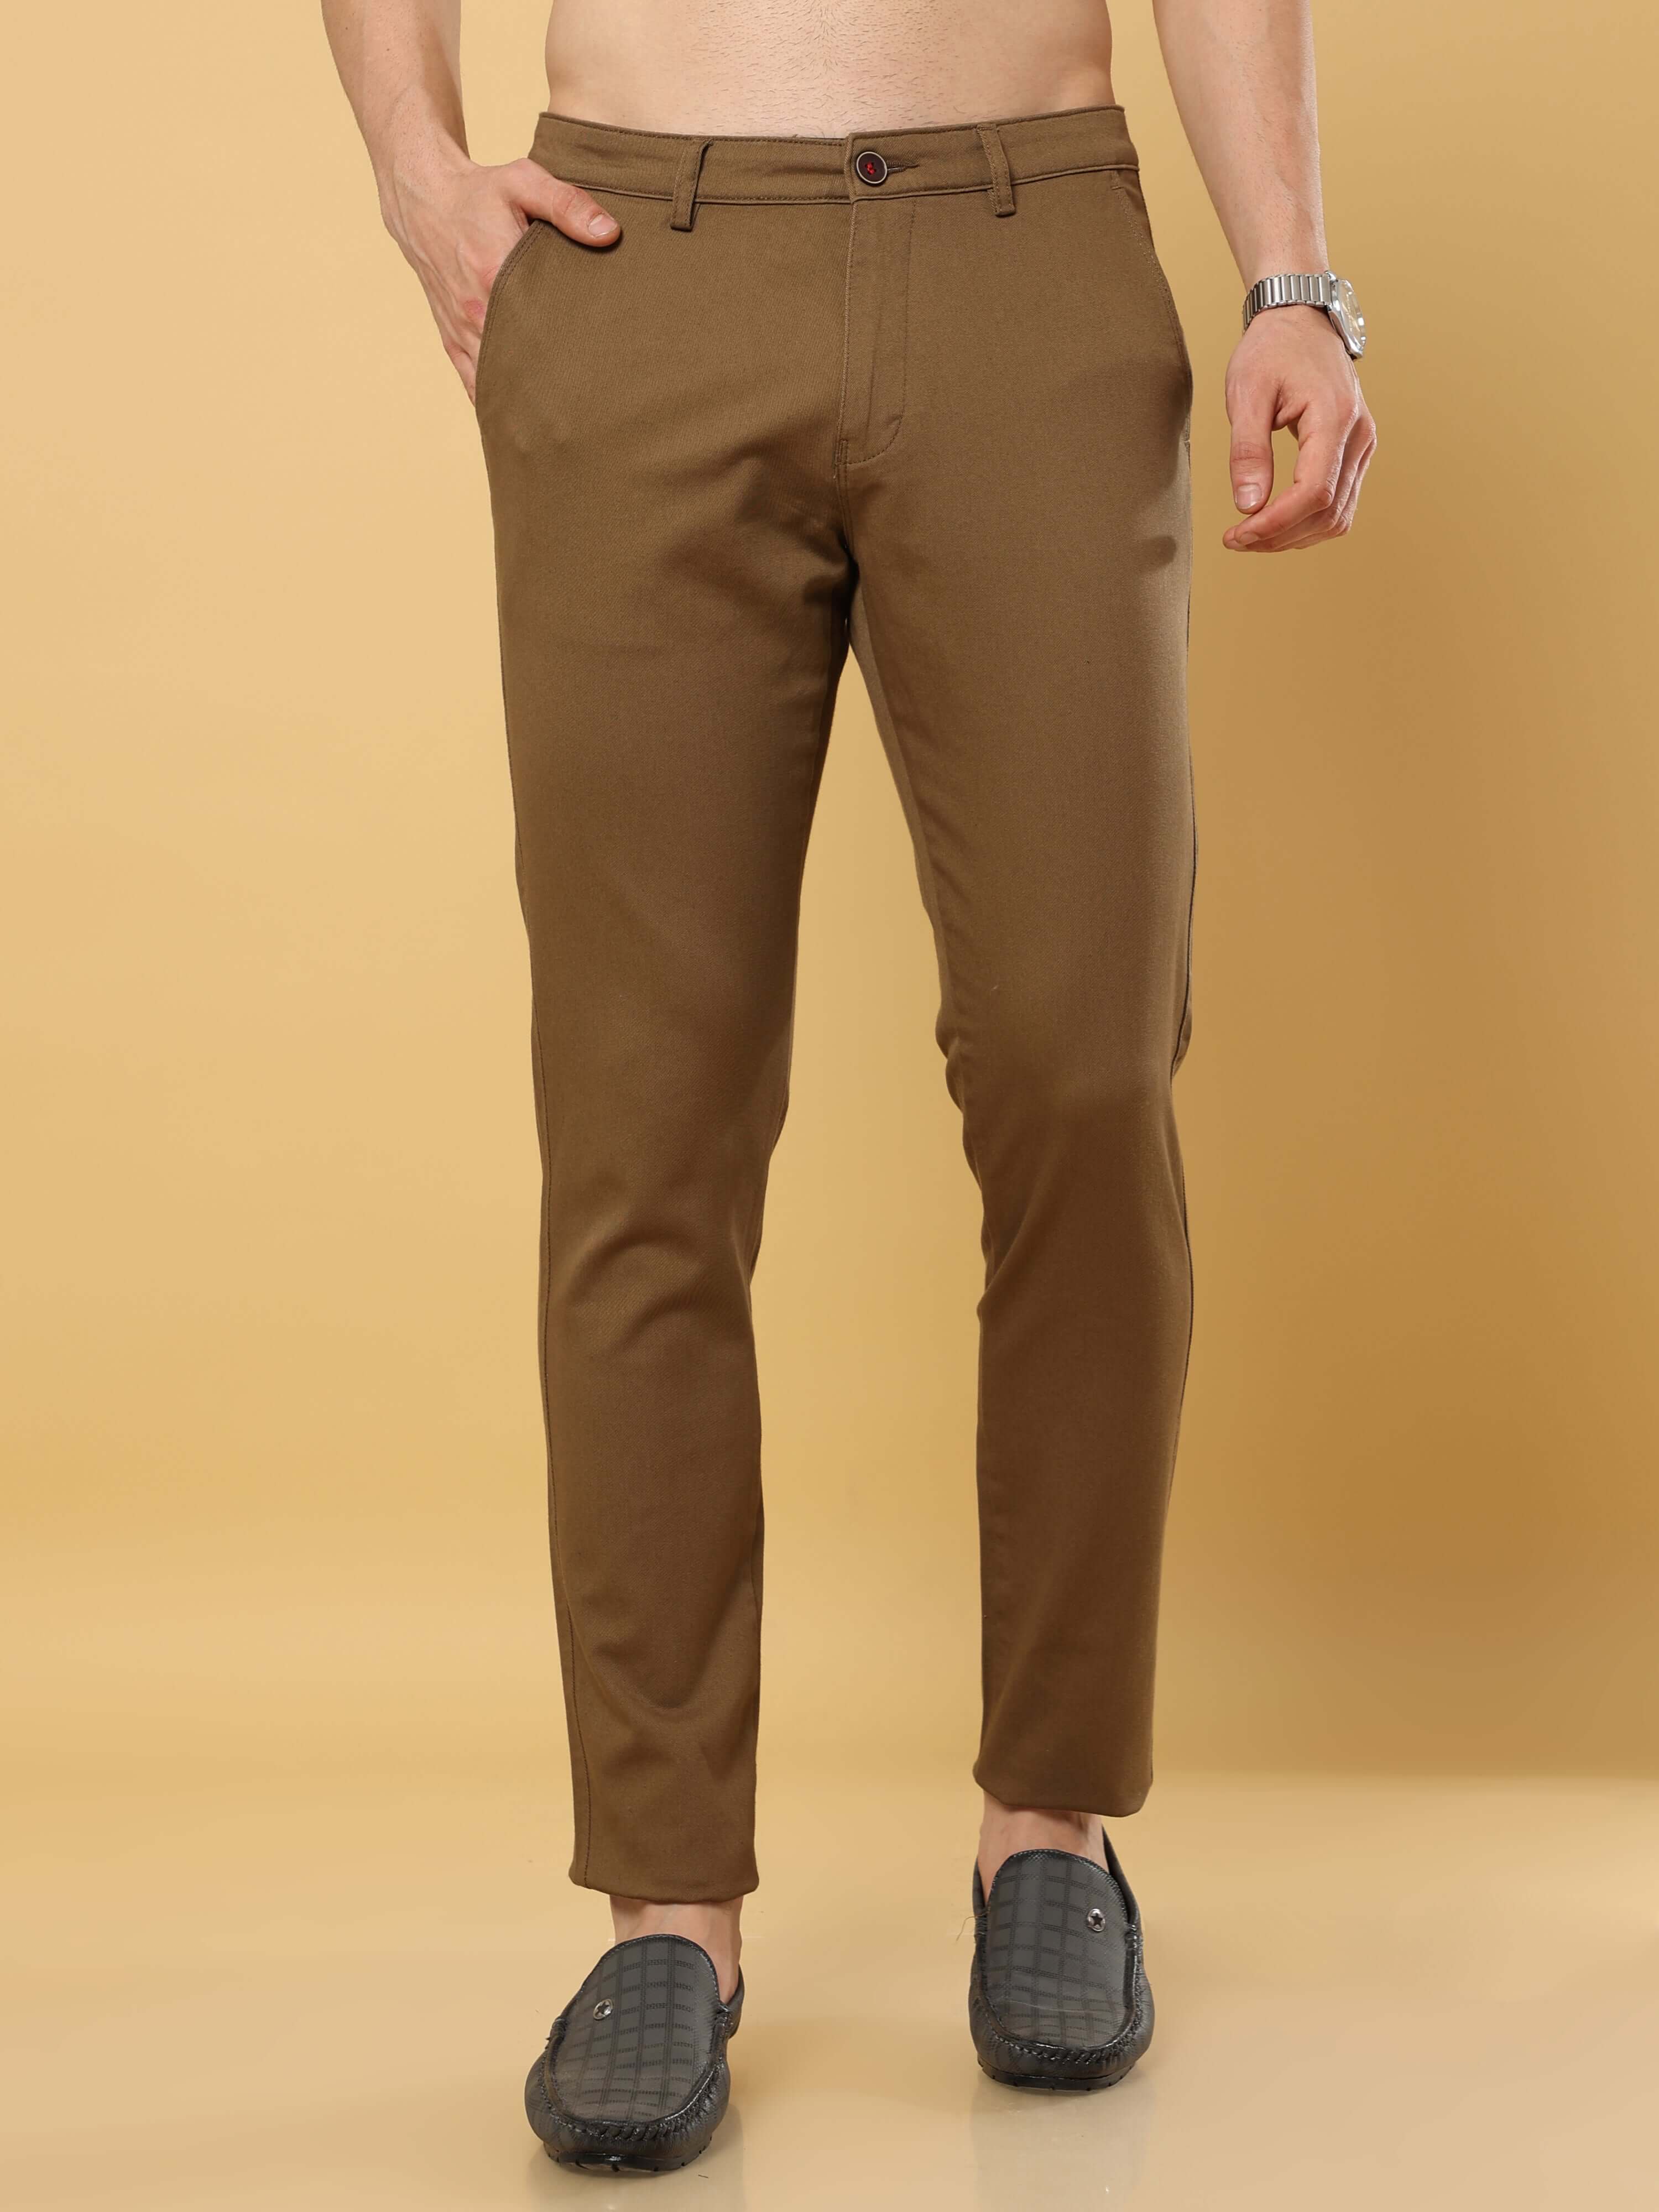 Solid Brown Chino Pants